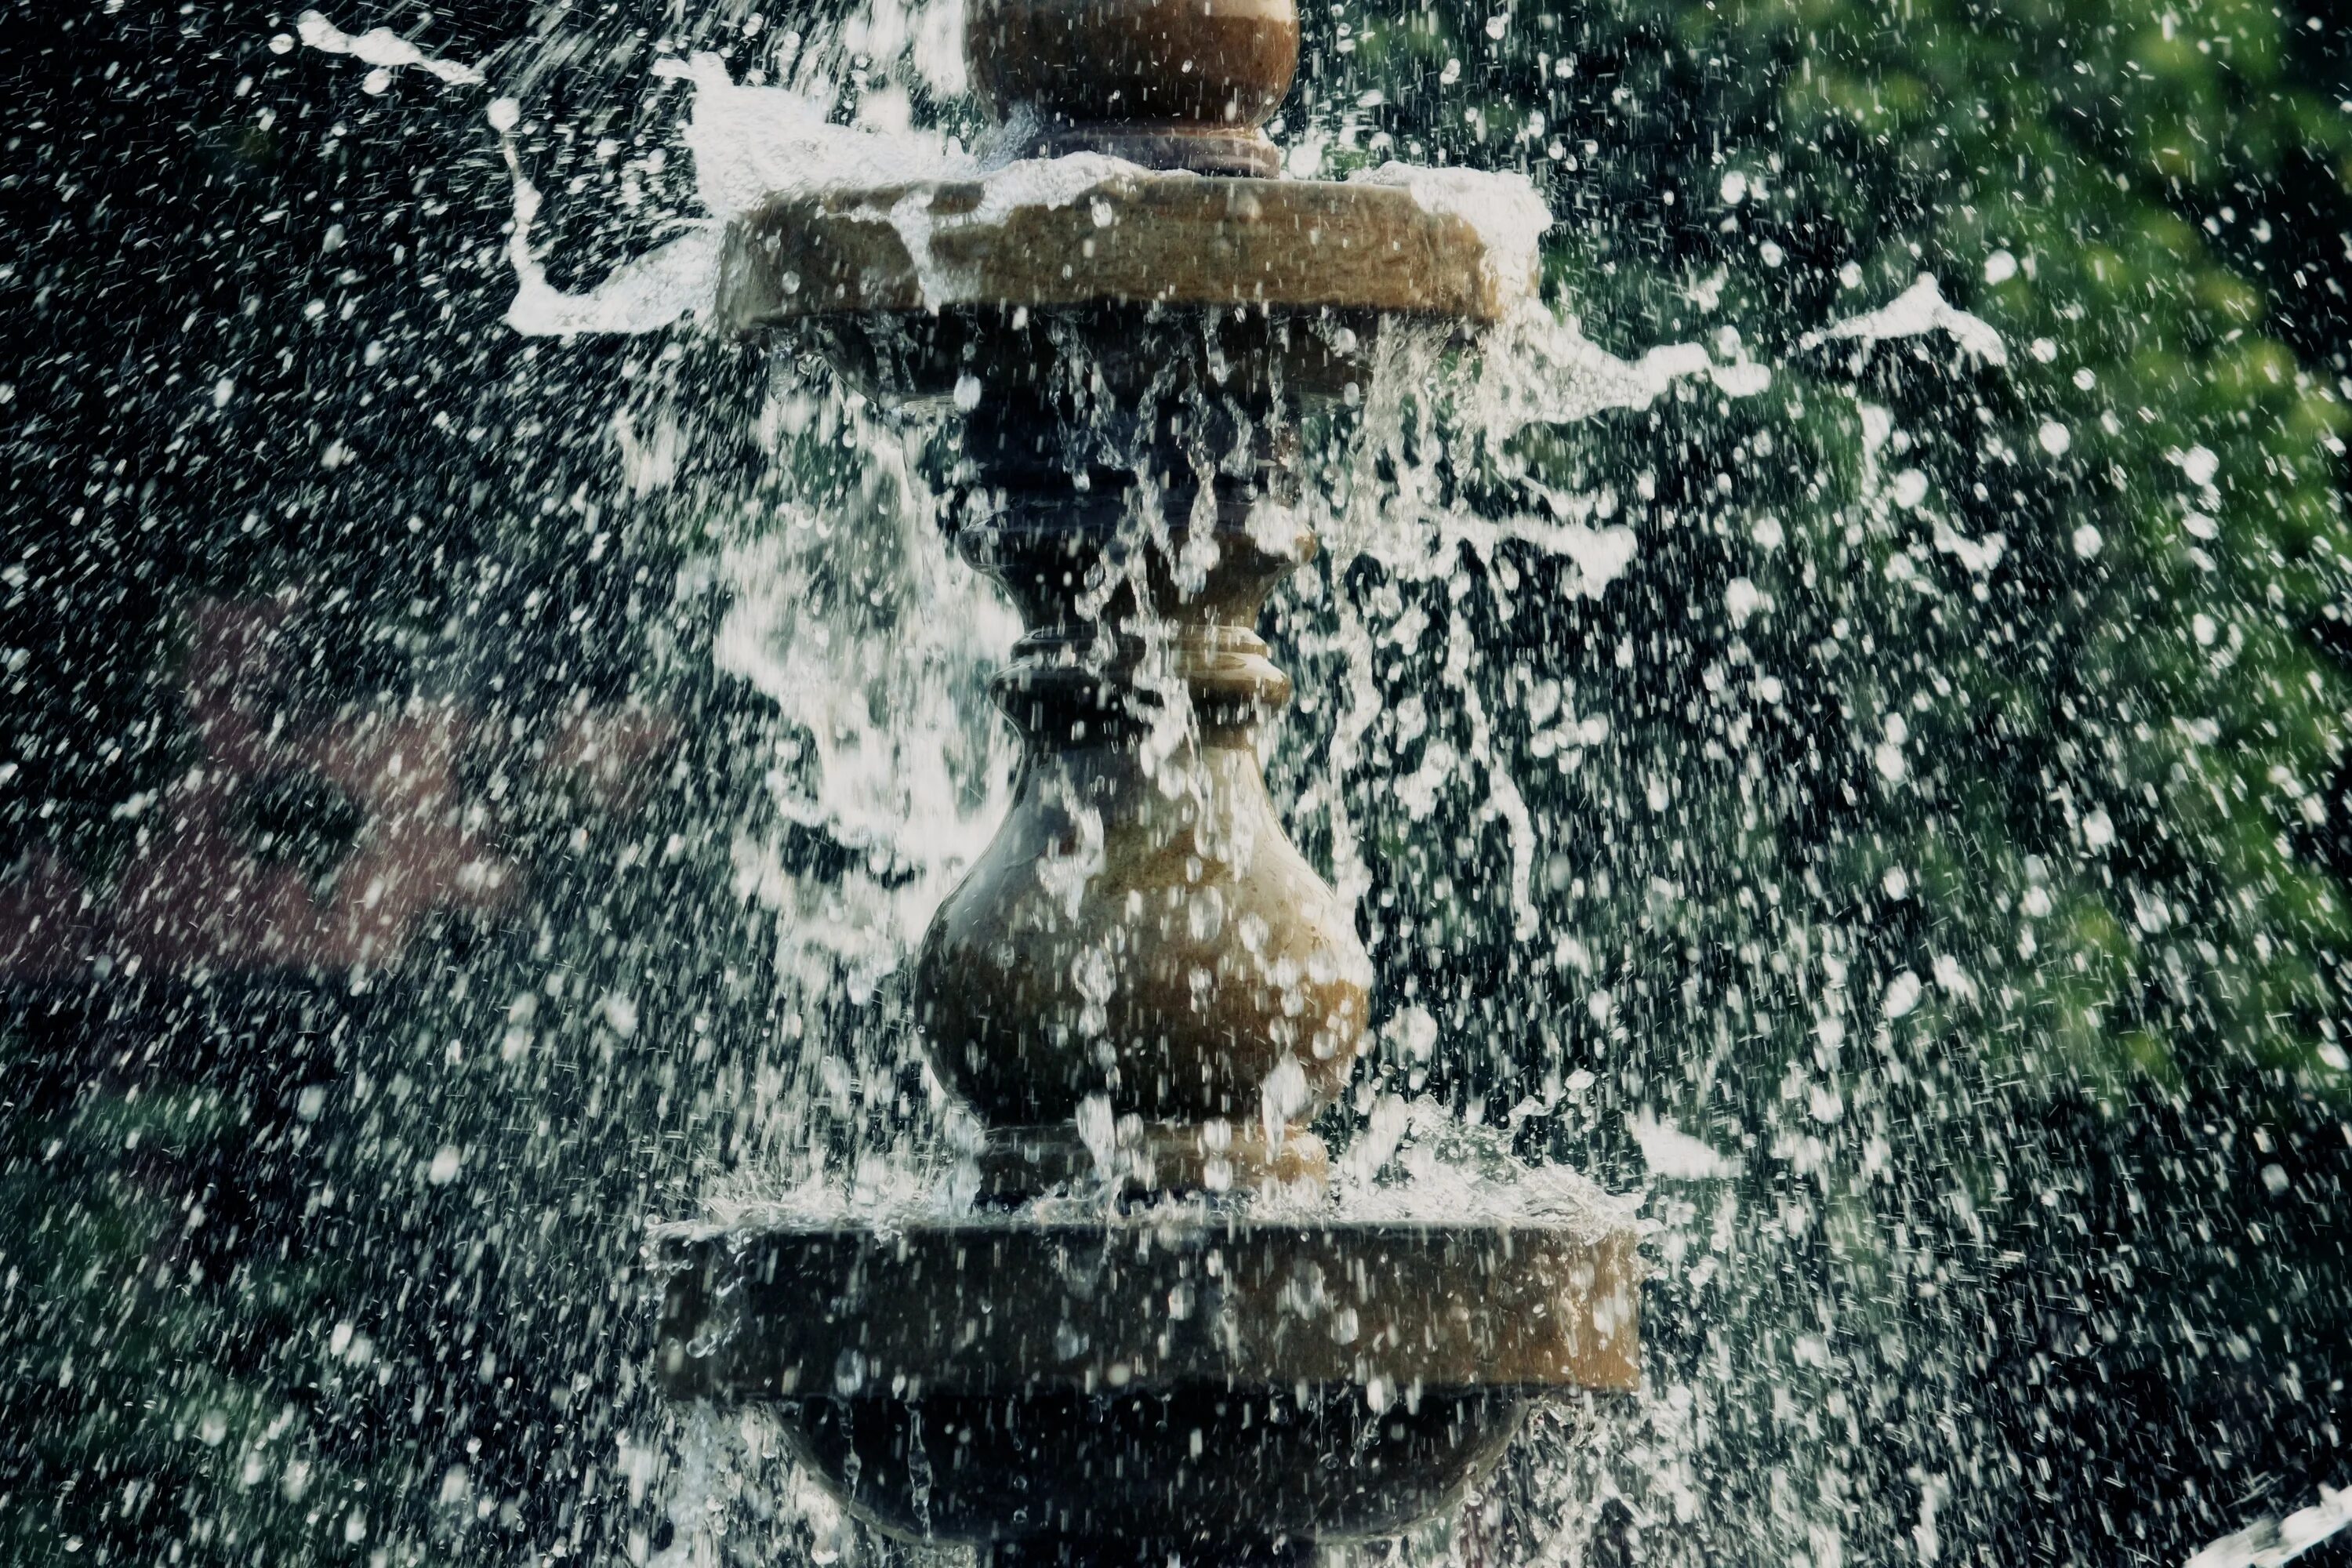 Water fountain перевод на русский. Брызги фонтана. Вода в фонтане. Брызги из фонтана. Вода из фонтана.